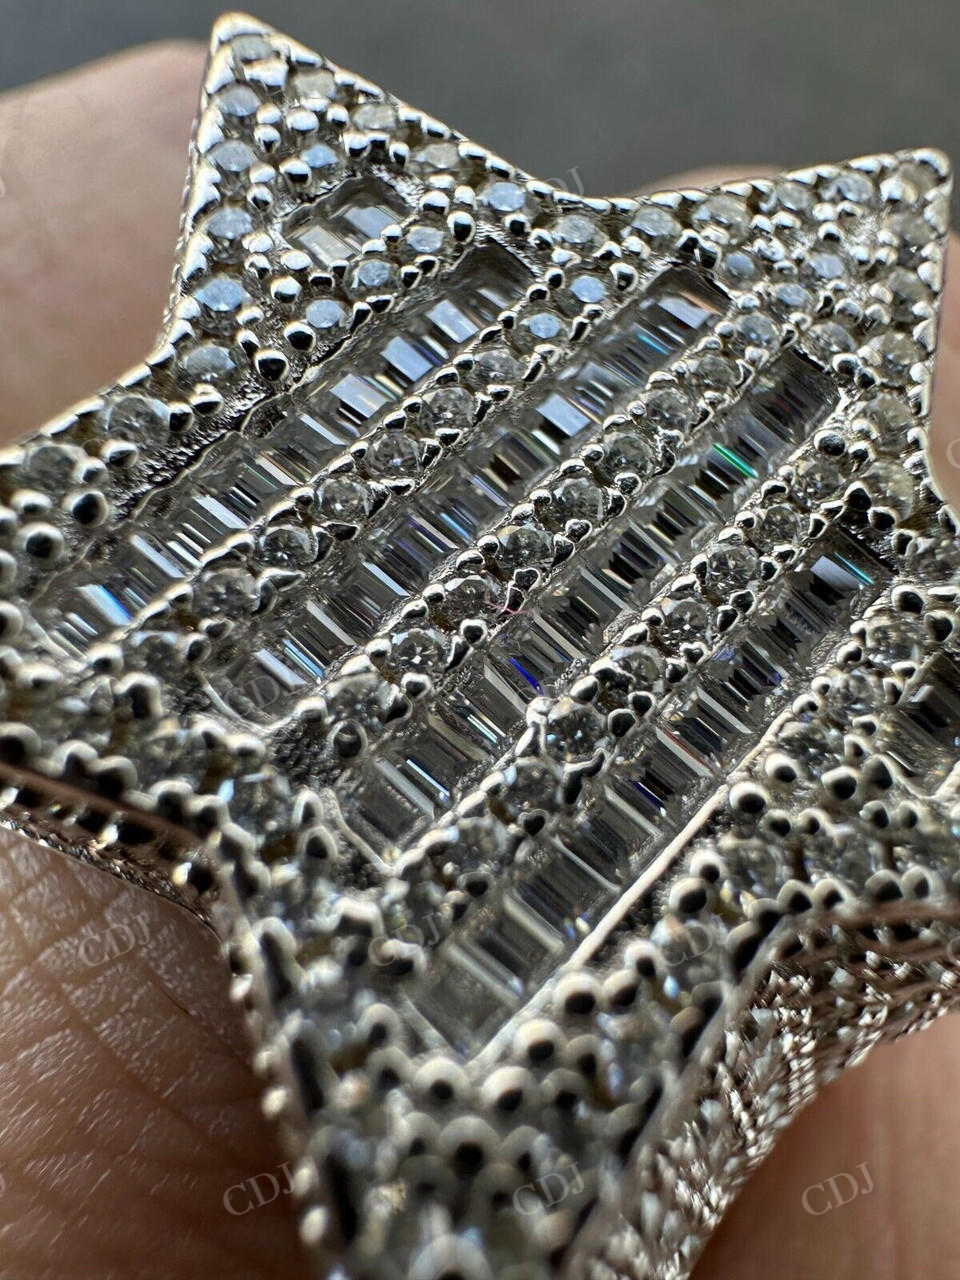 Hip Hop Iced Out Baguette Star Shaped Diamond Ring  customdiamjewel   